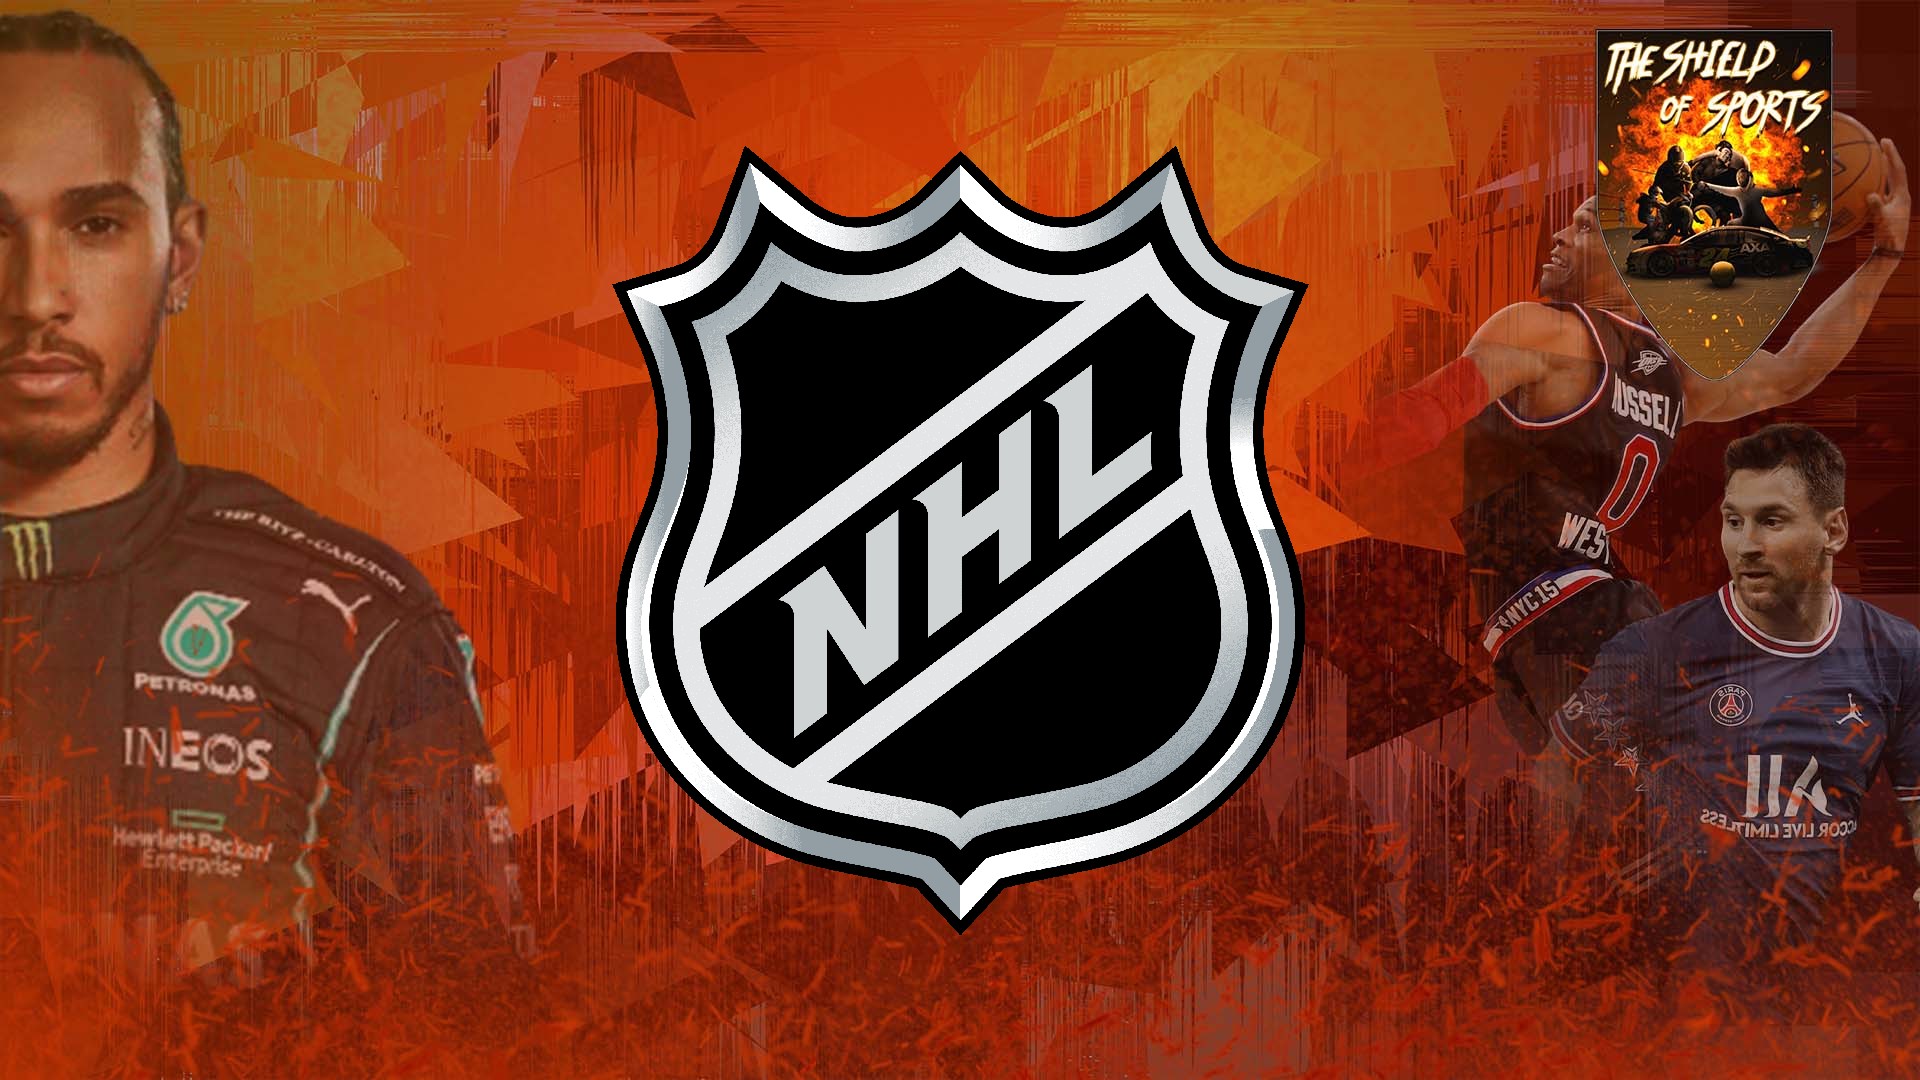 Ian Cole reintegrato dall'NHL, cadono le accuse